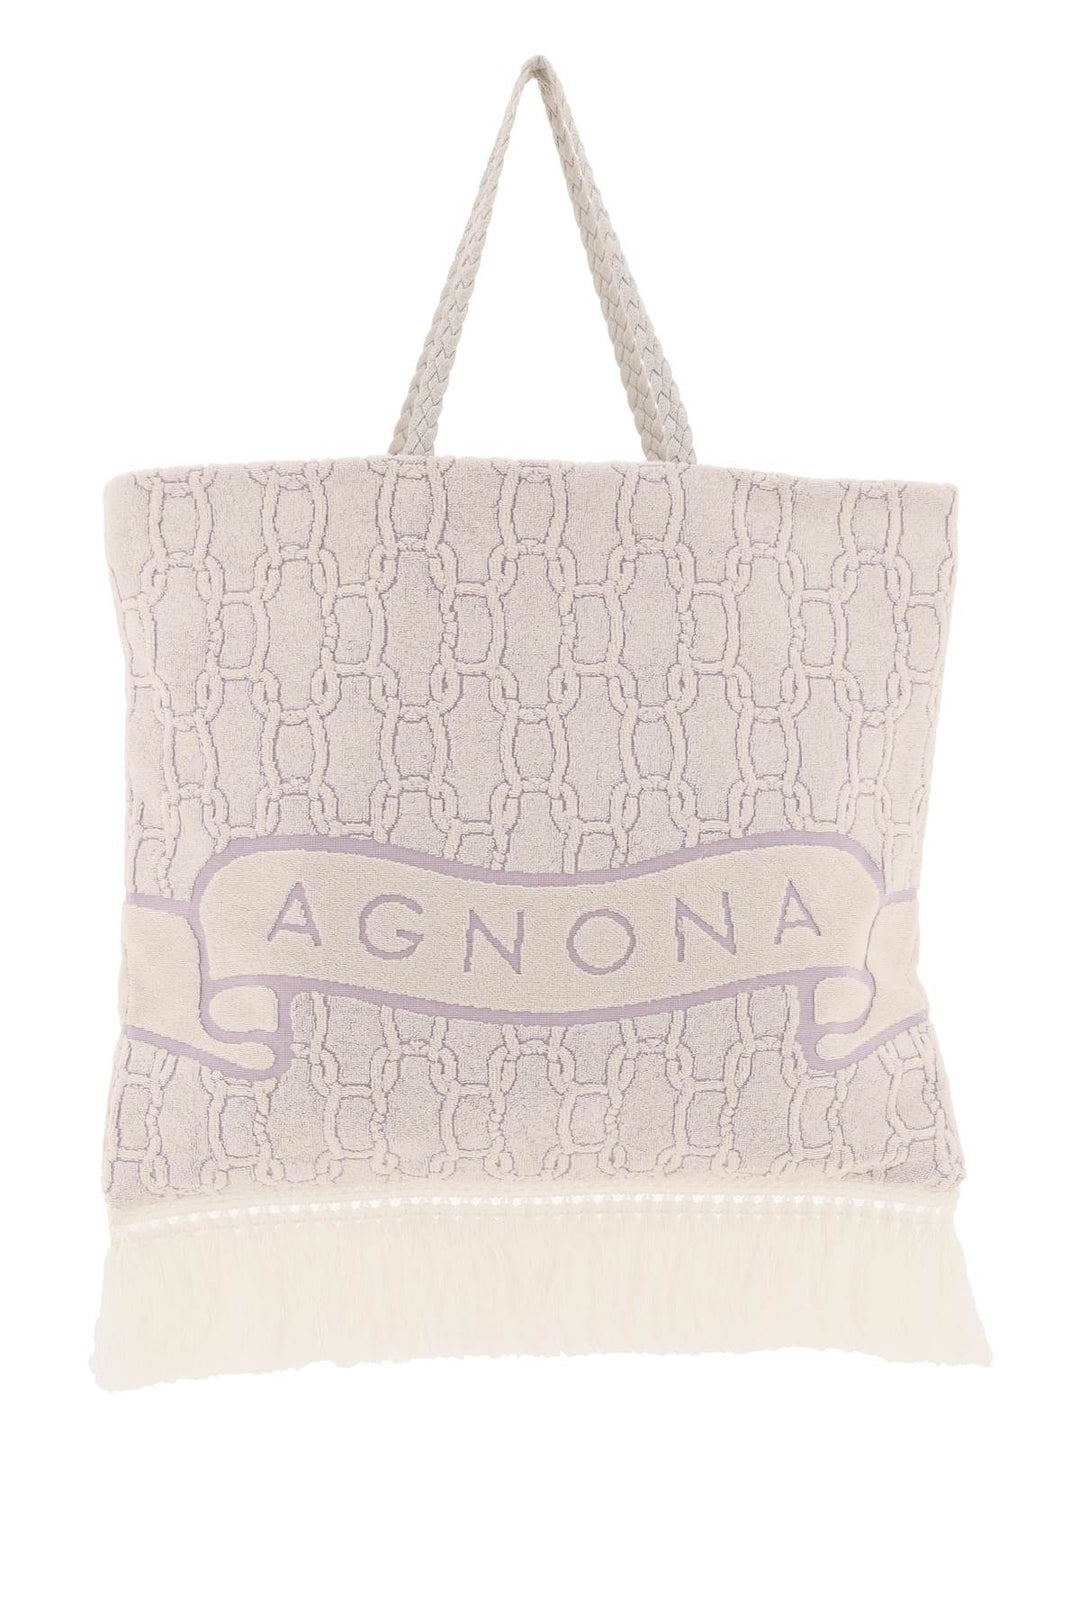 Agnona Cotton Tote Bag   Bianco